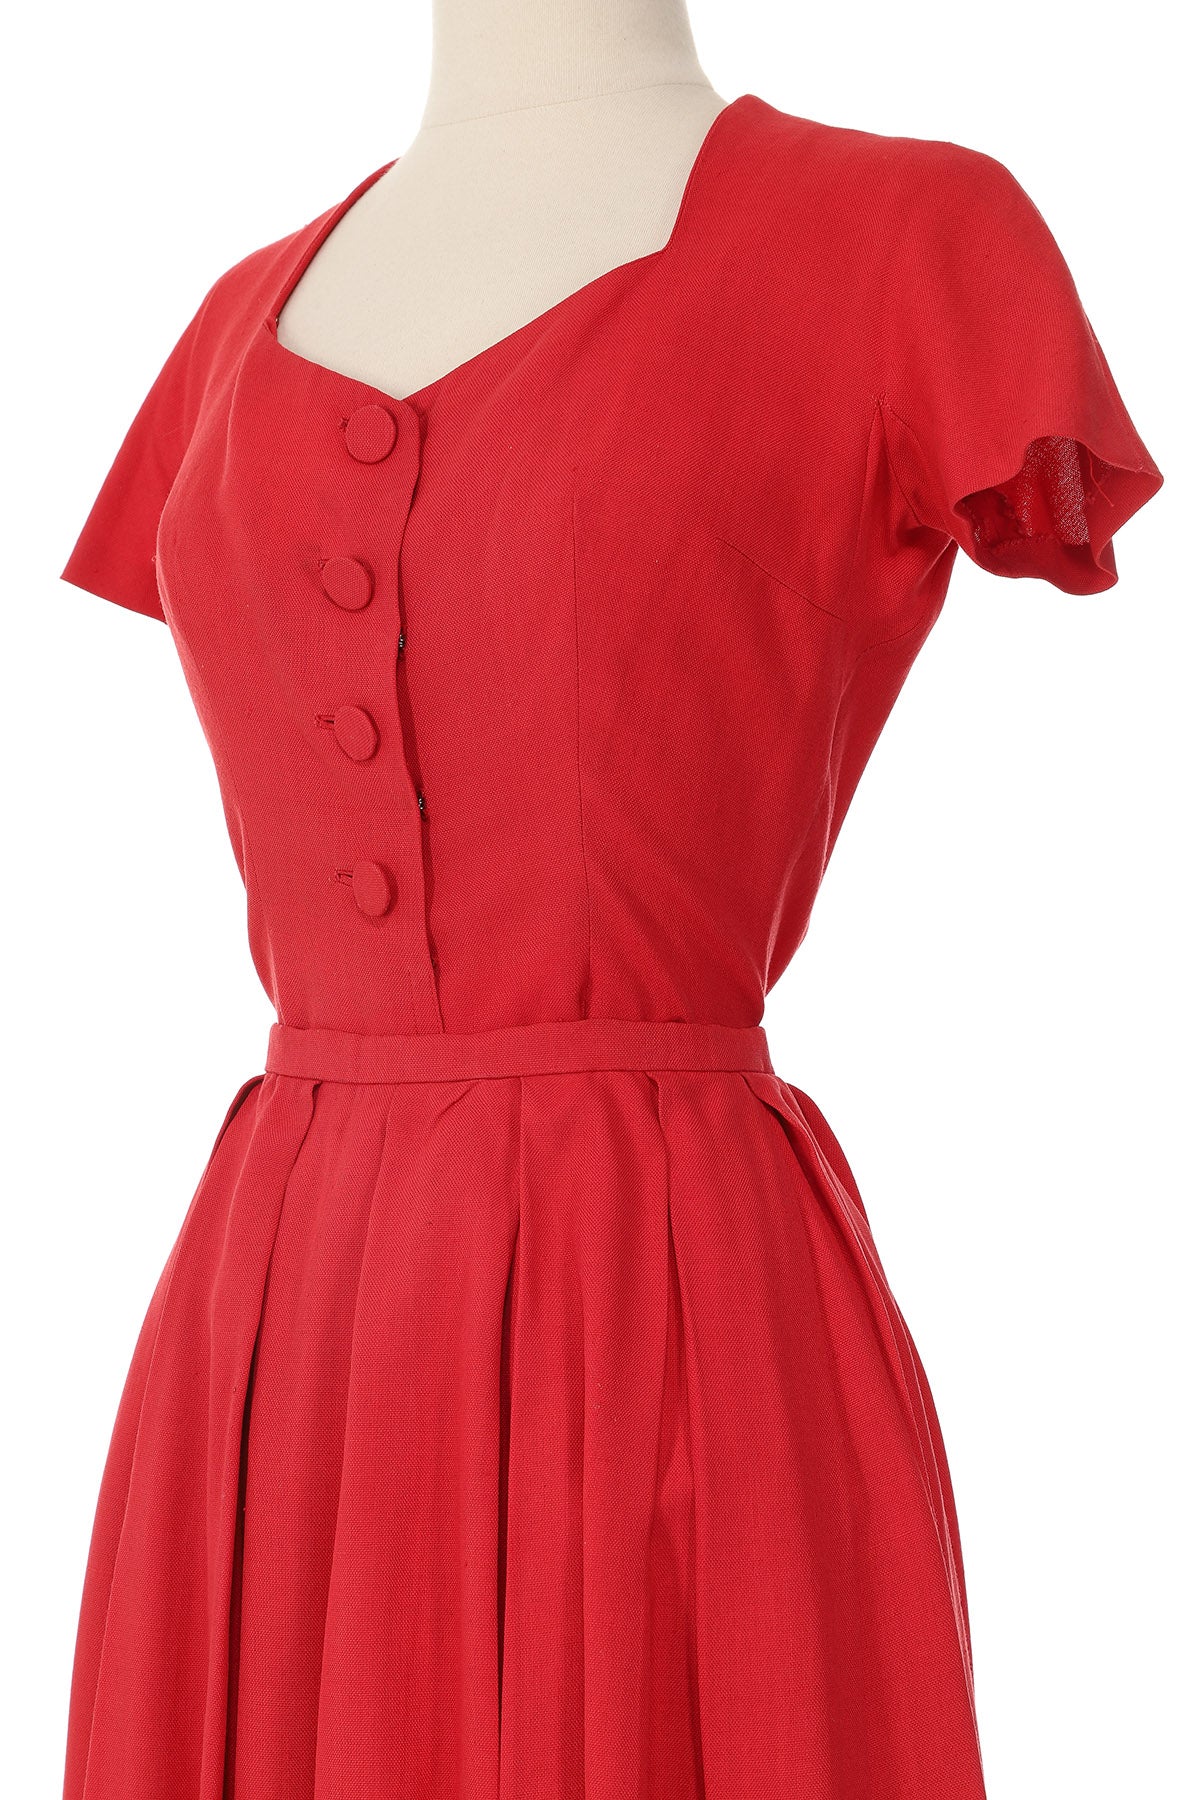 Balenciaga Red Skirt Suit